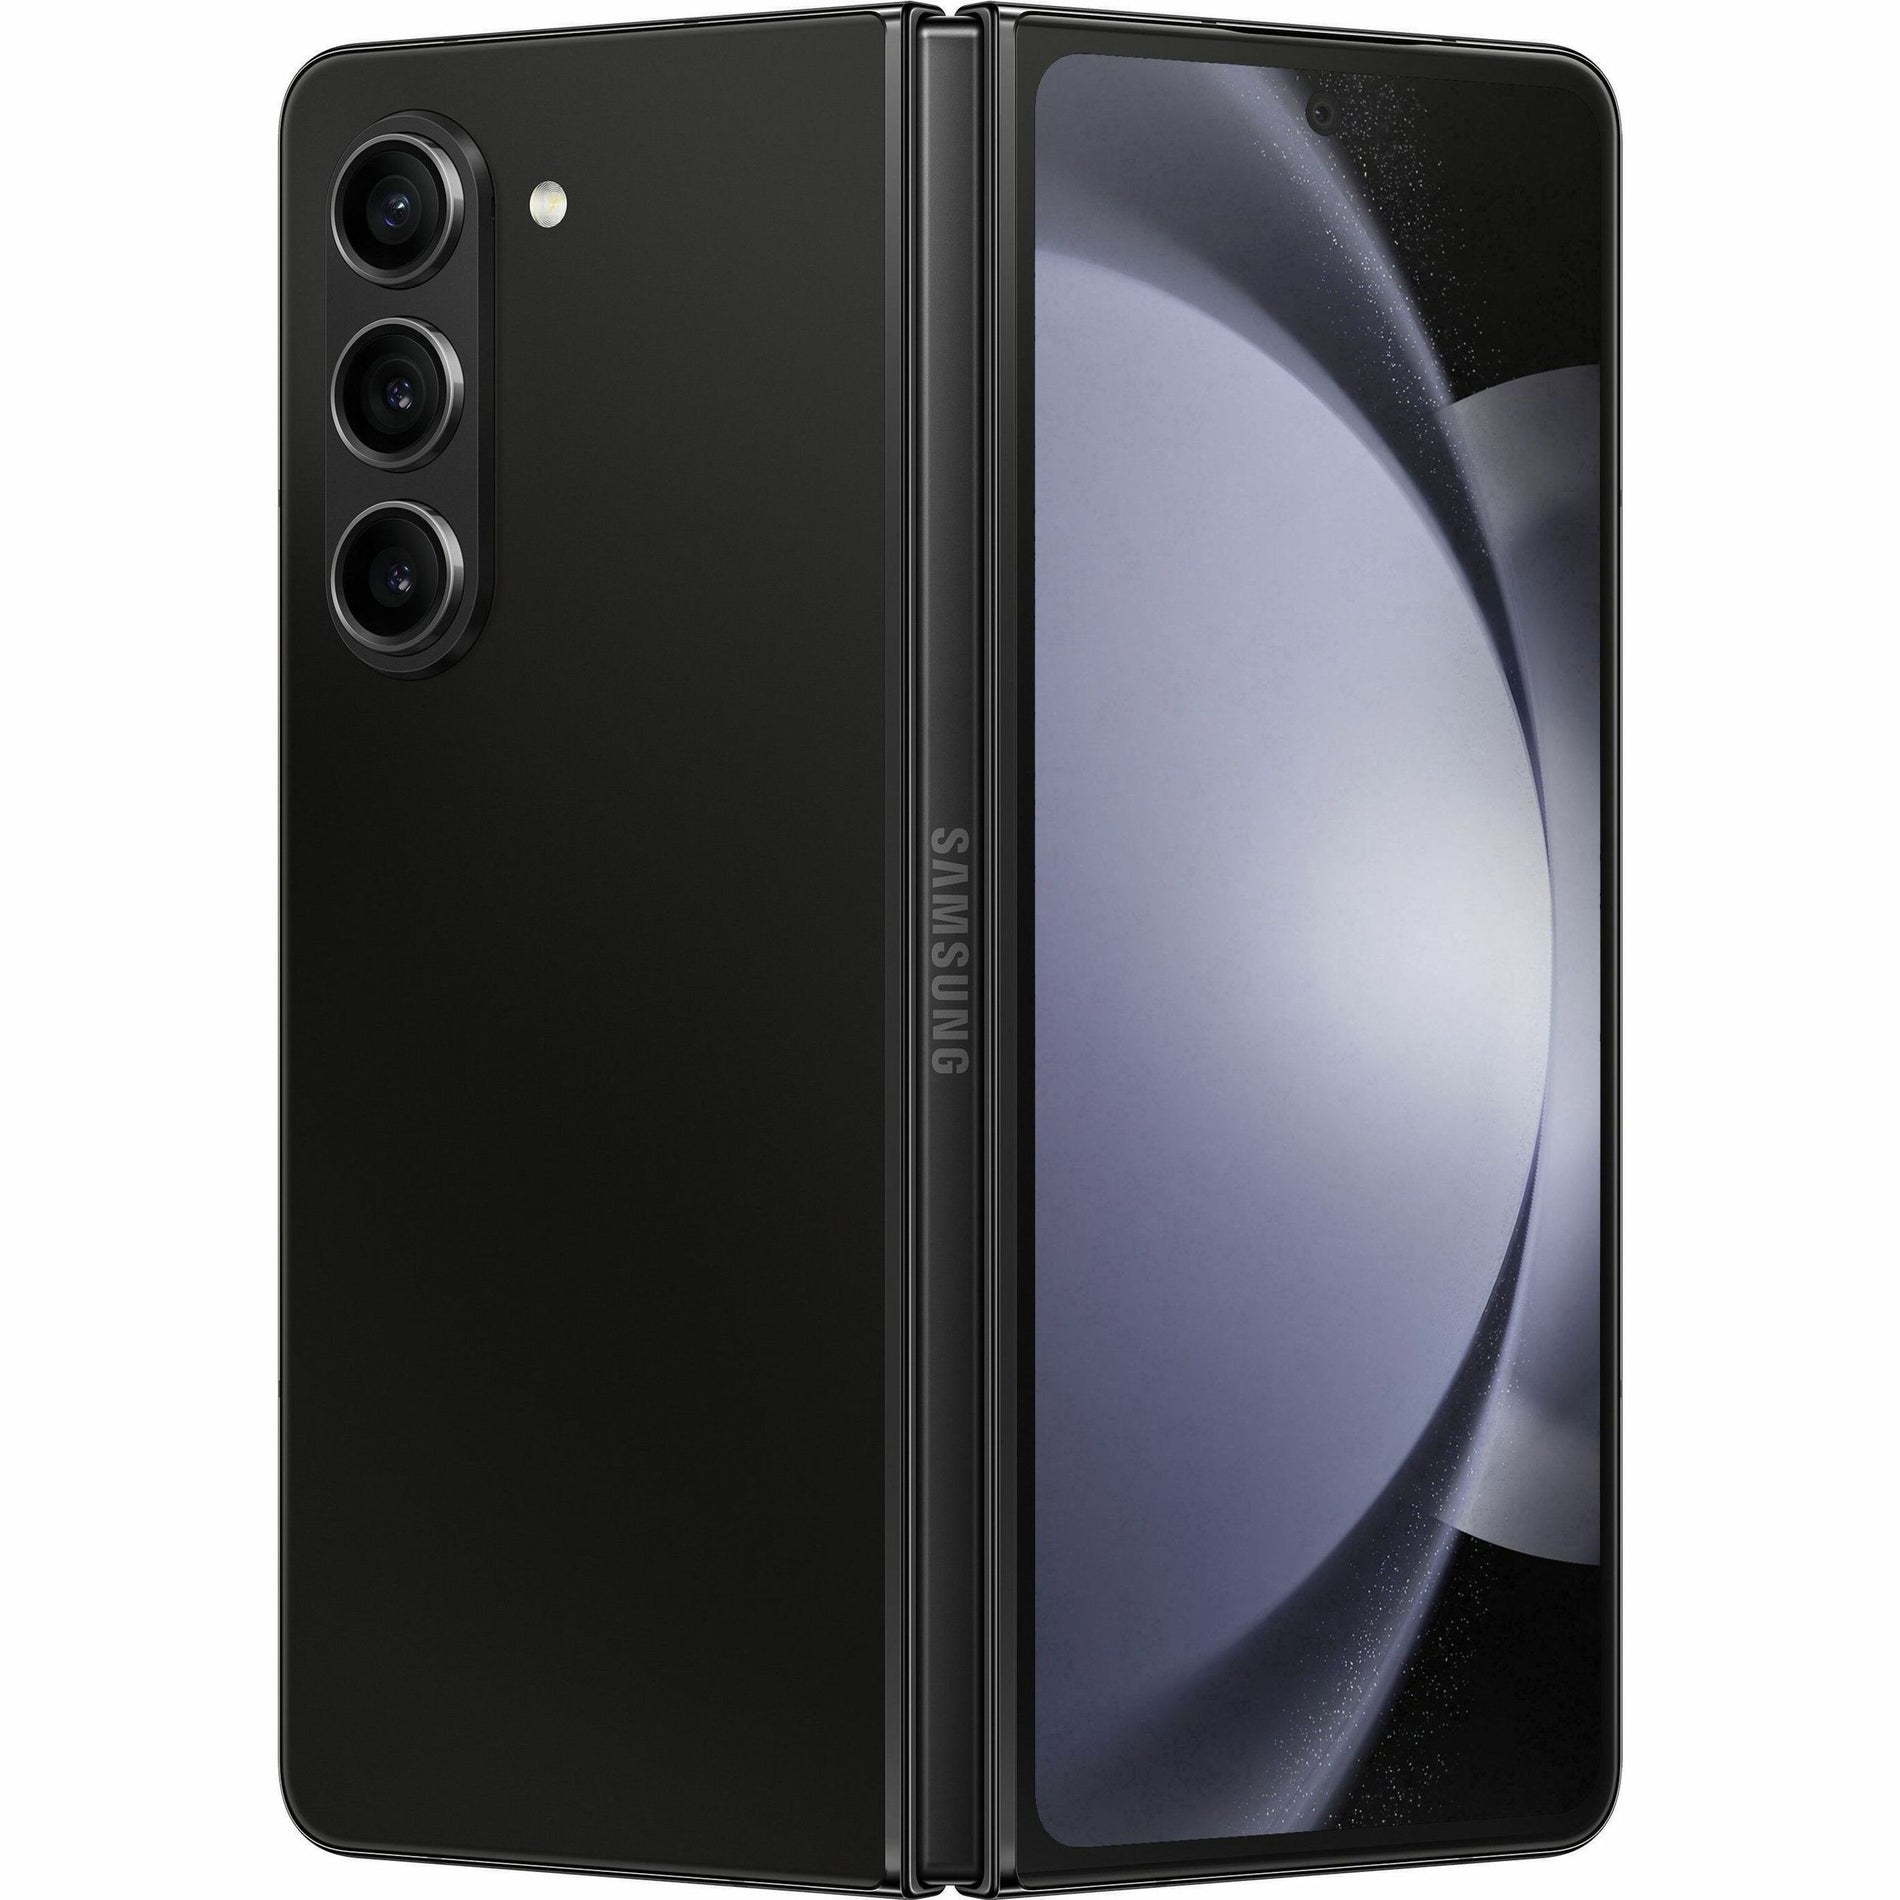 Samsung SM-F946UZKEXAA Galaxy Z Fold5 SM-F946 Smartphone, 512GB Unlocked,  Phantom Black, Foldable 7.6